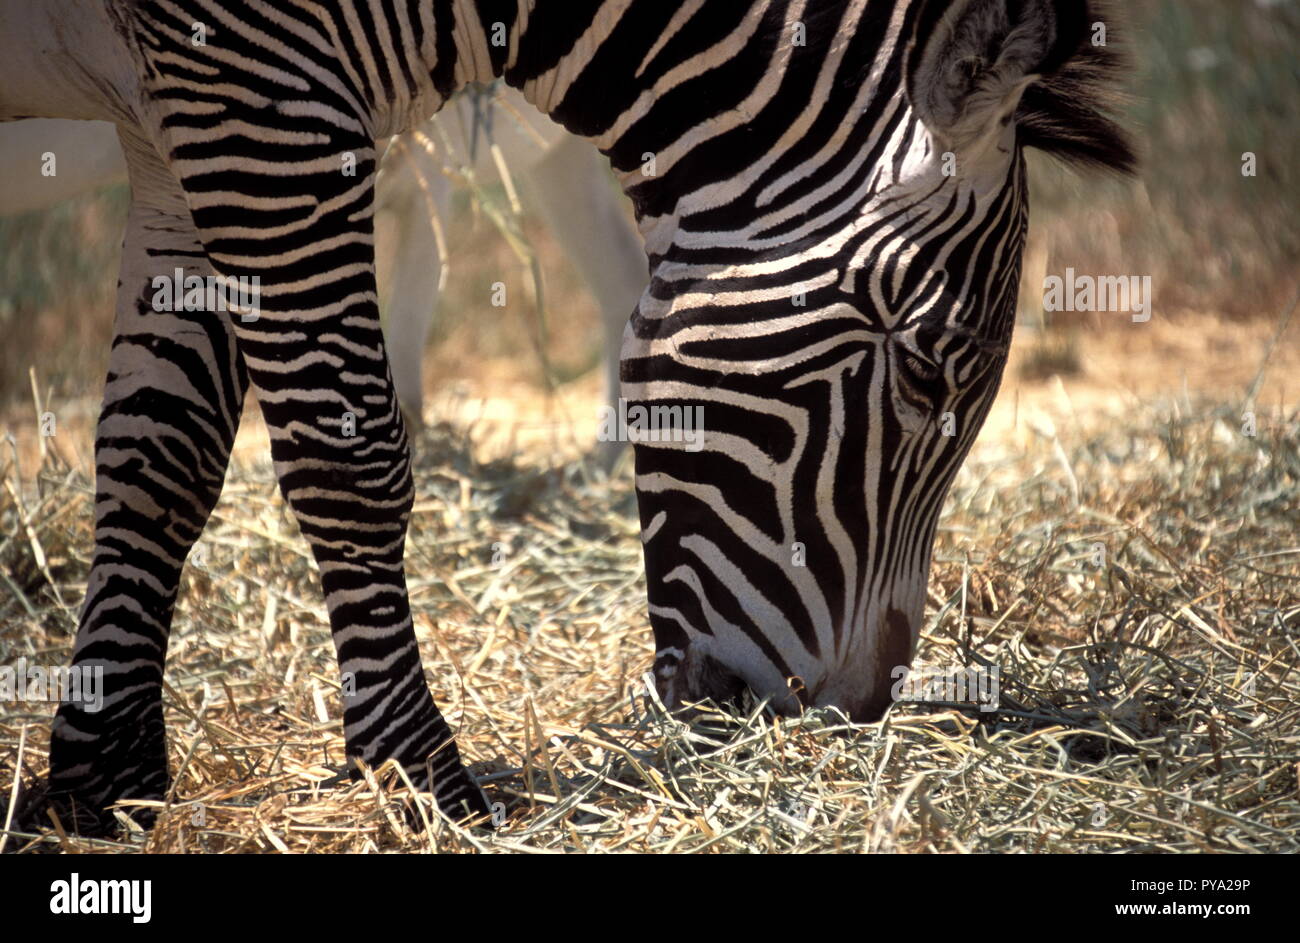 zebra, close up on the head Stock Photo